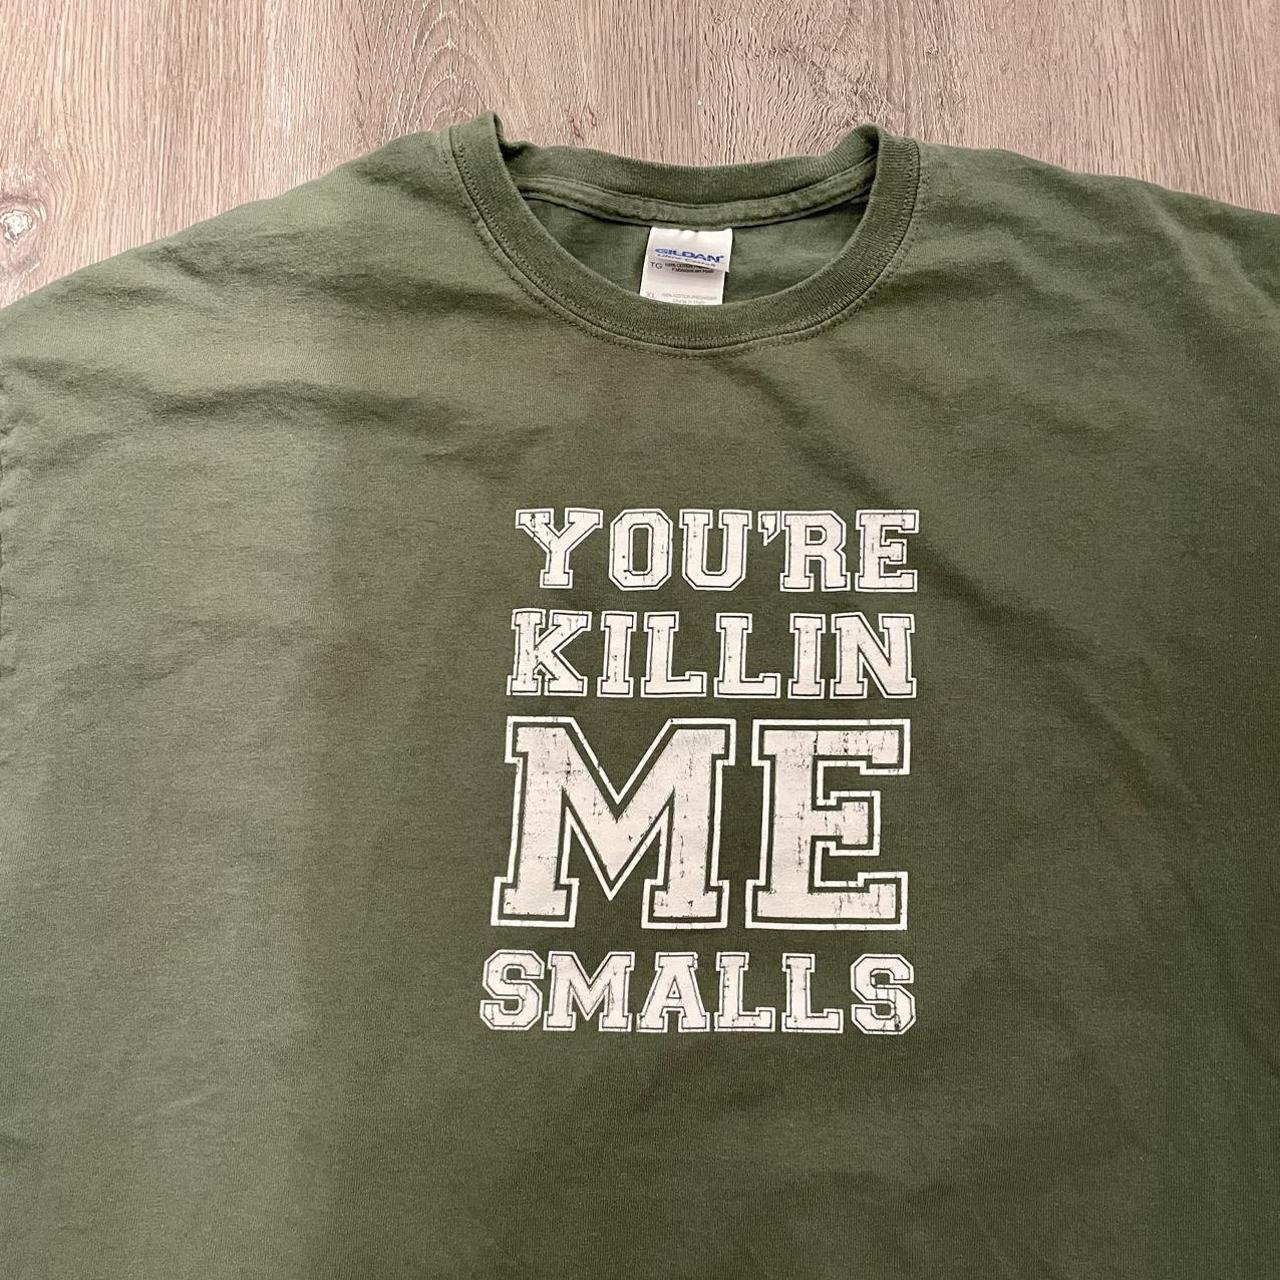 The Sandlot You're Killing Me Smalls Shirt Size XL - Depop